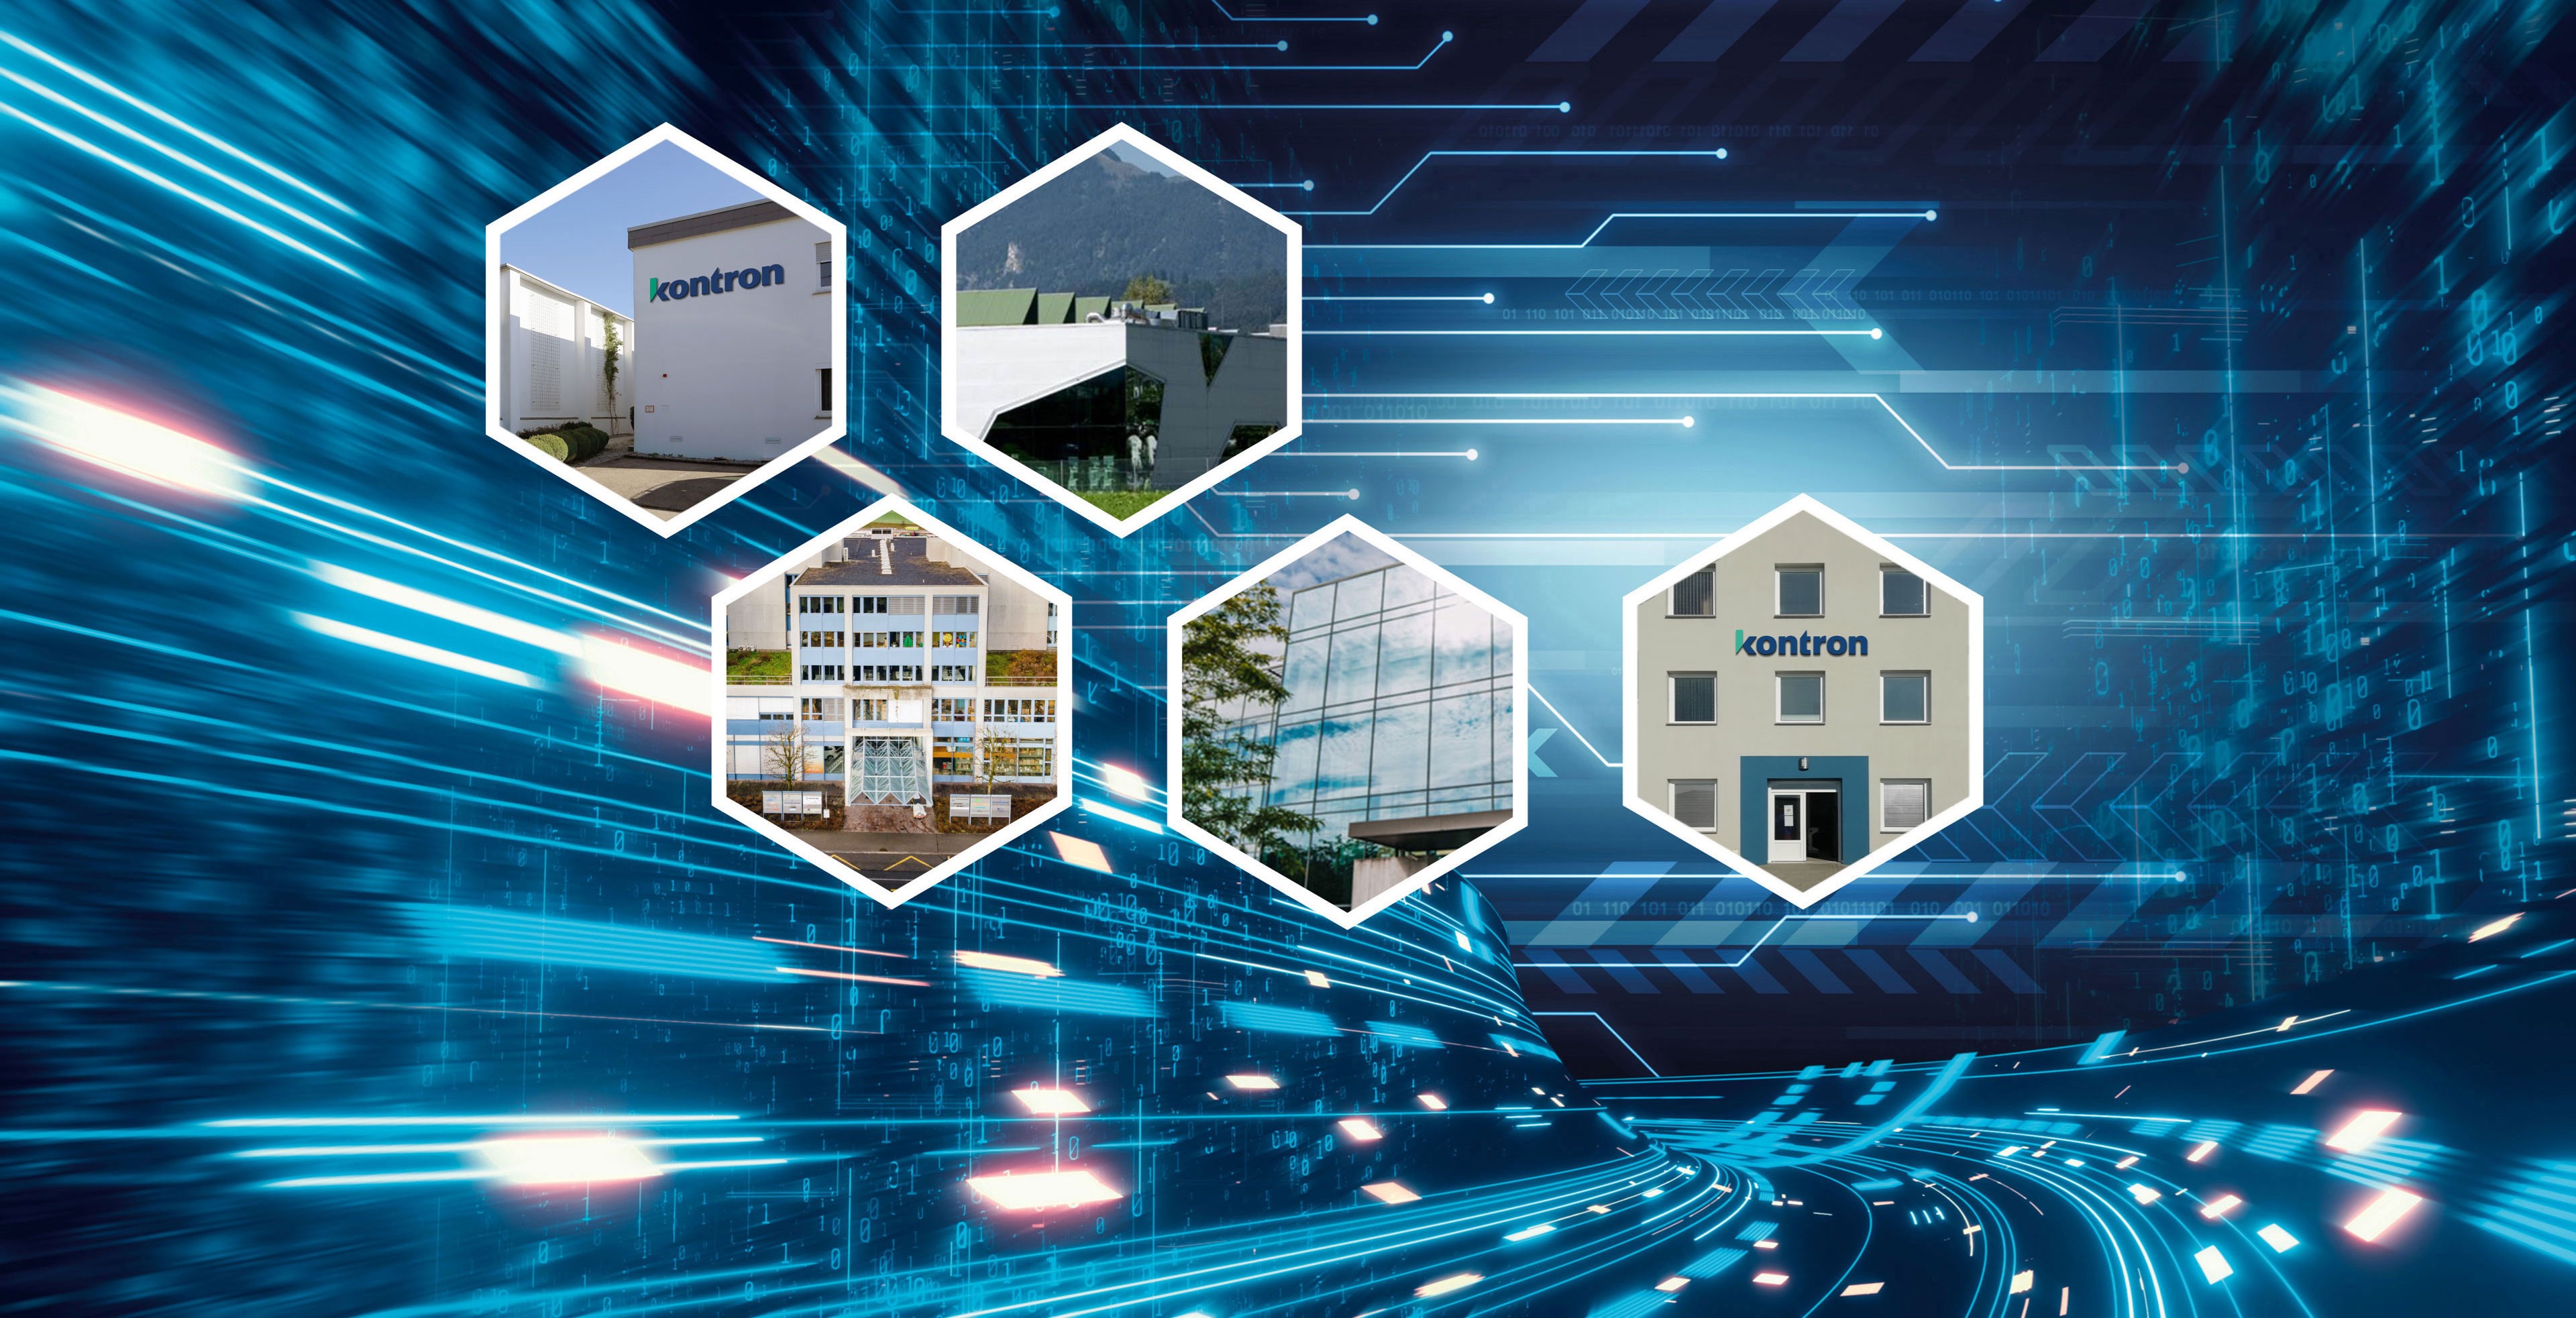 Stavbe podjetij Kontron Electronics Nemčija, Švica, Madžarska, Kontron Avstrija in Iskratel EMS